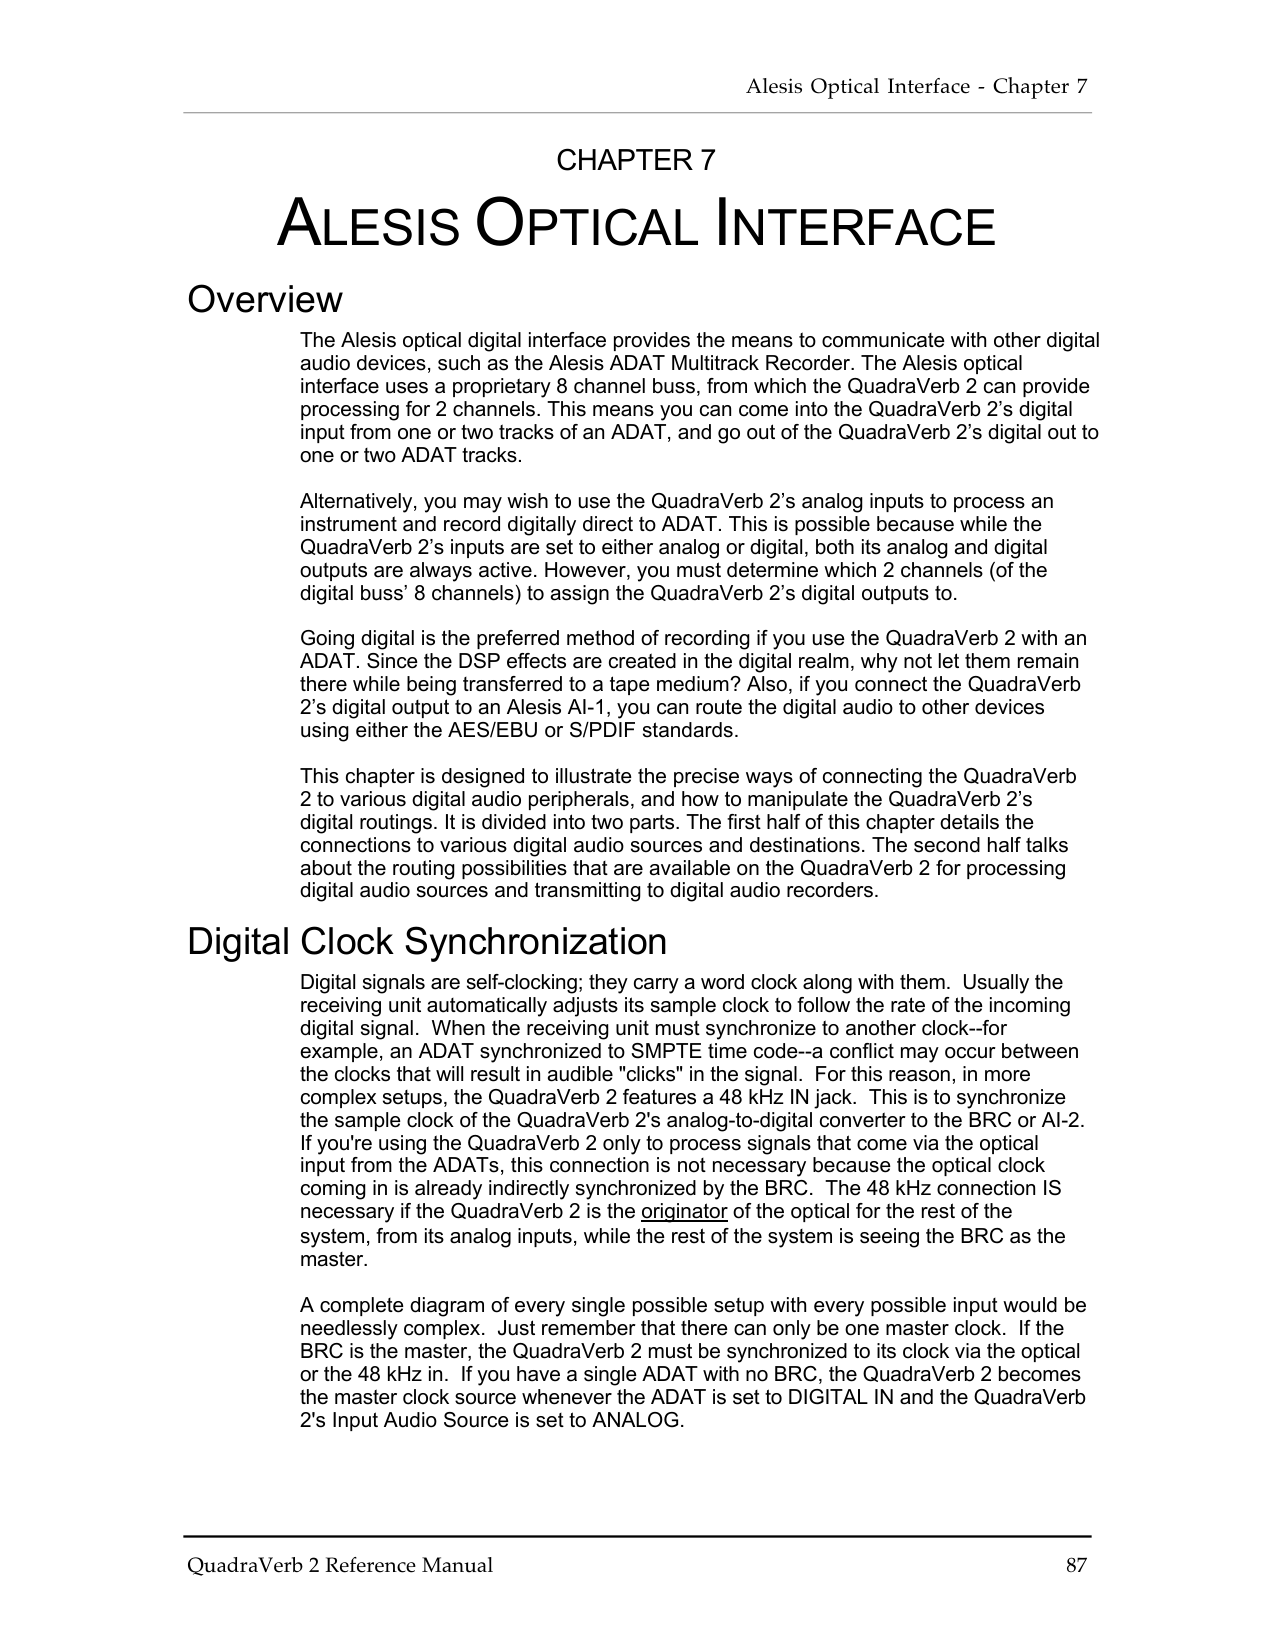 Alesis Quadrasynth User Manual Manualzz